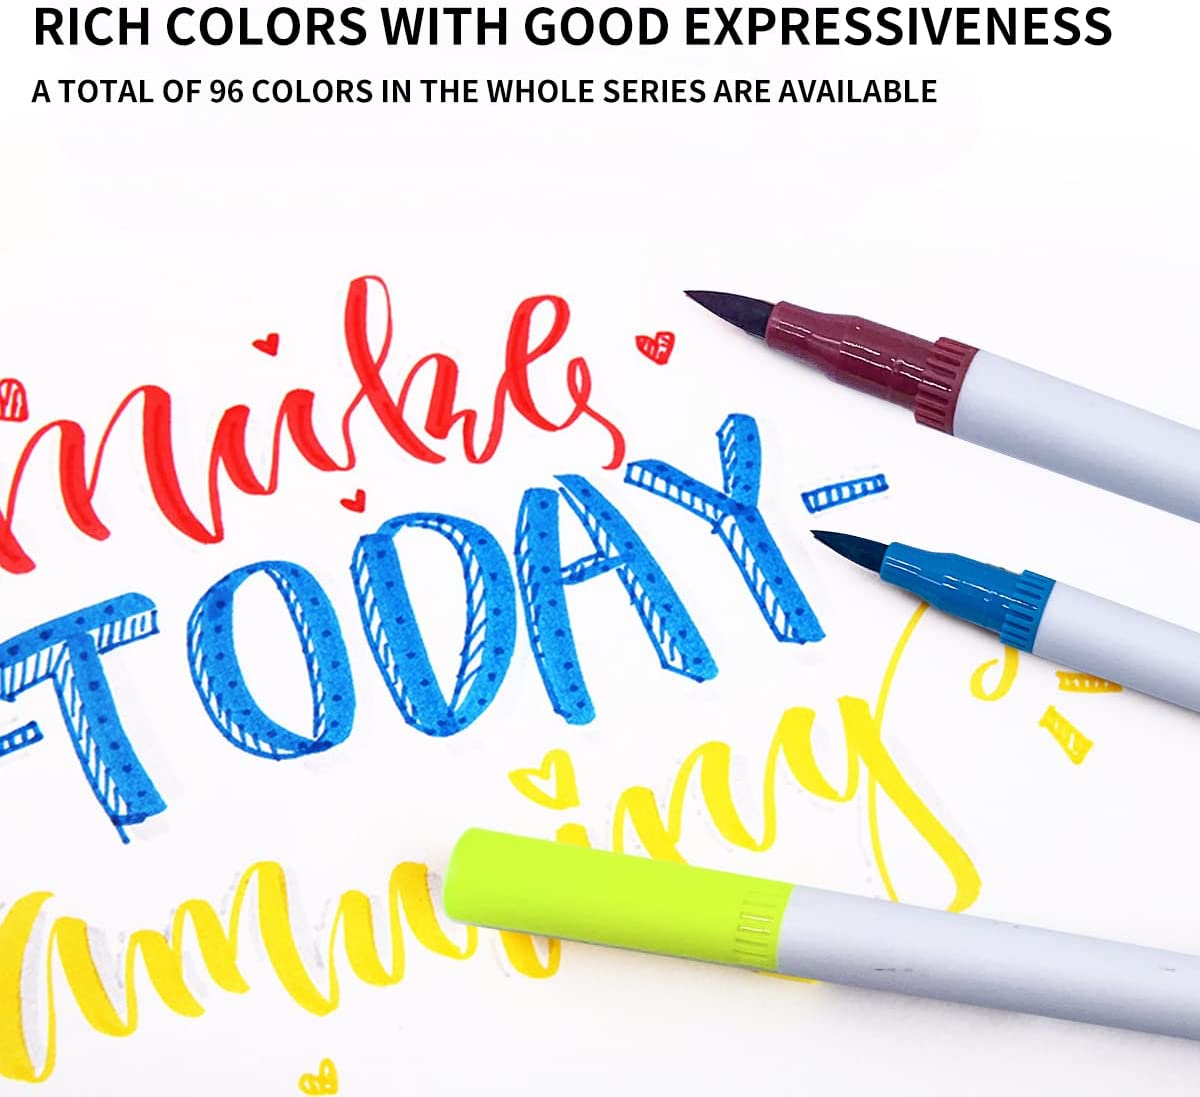 100 Colours Dual Tip Pen Set, Art Markers, Fineliner Pens for Kid